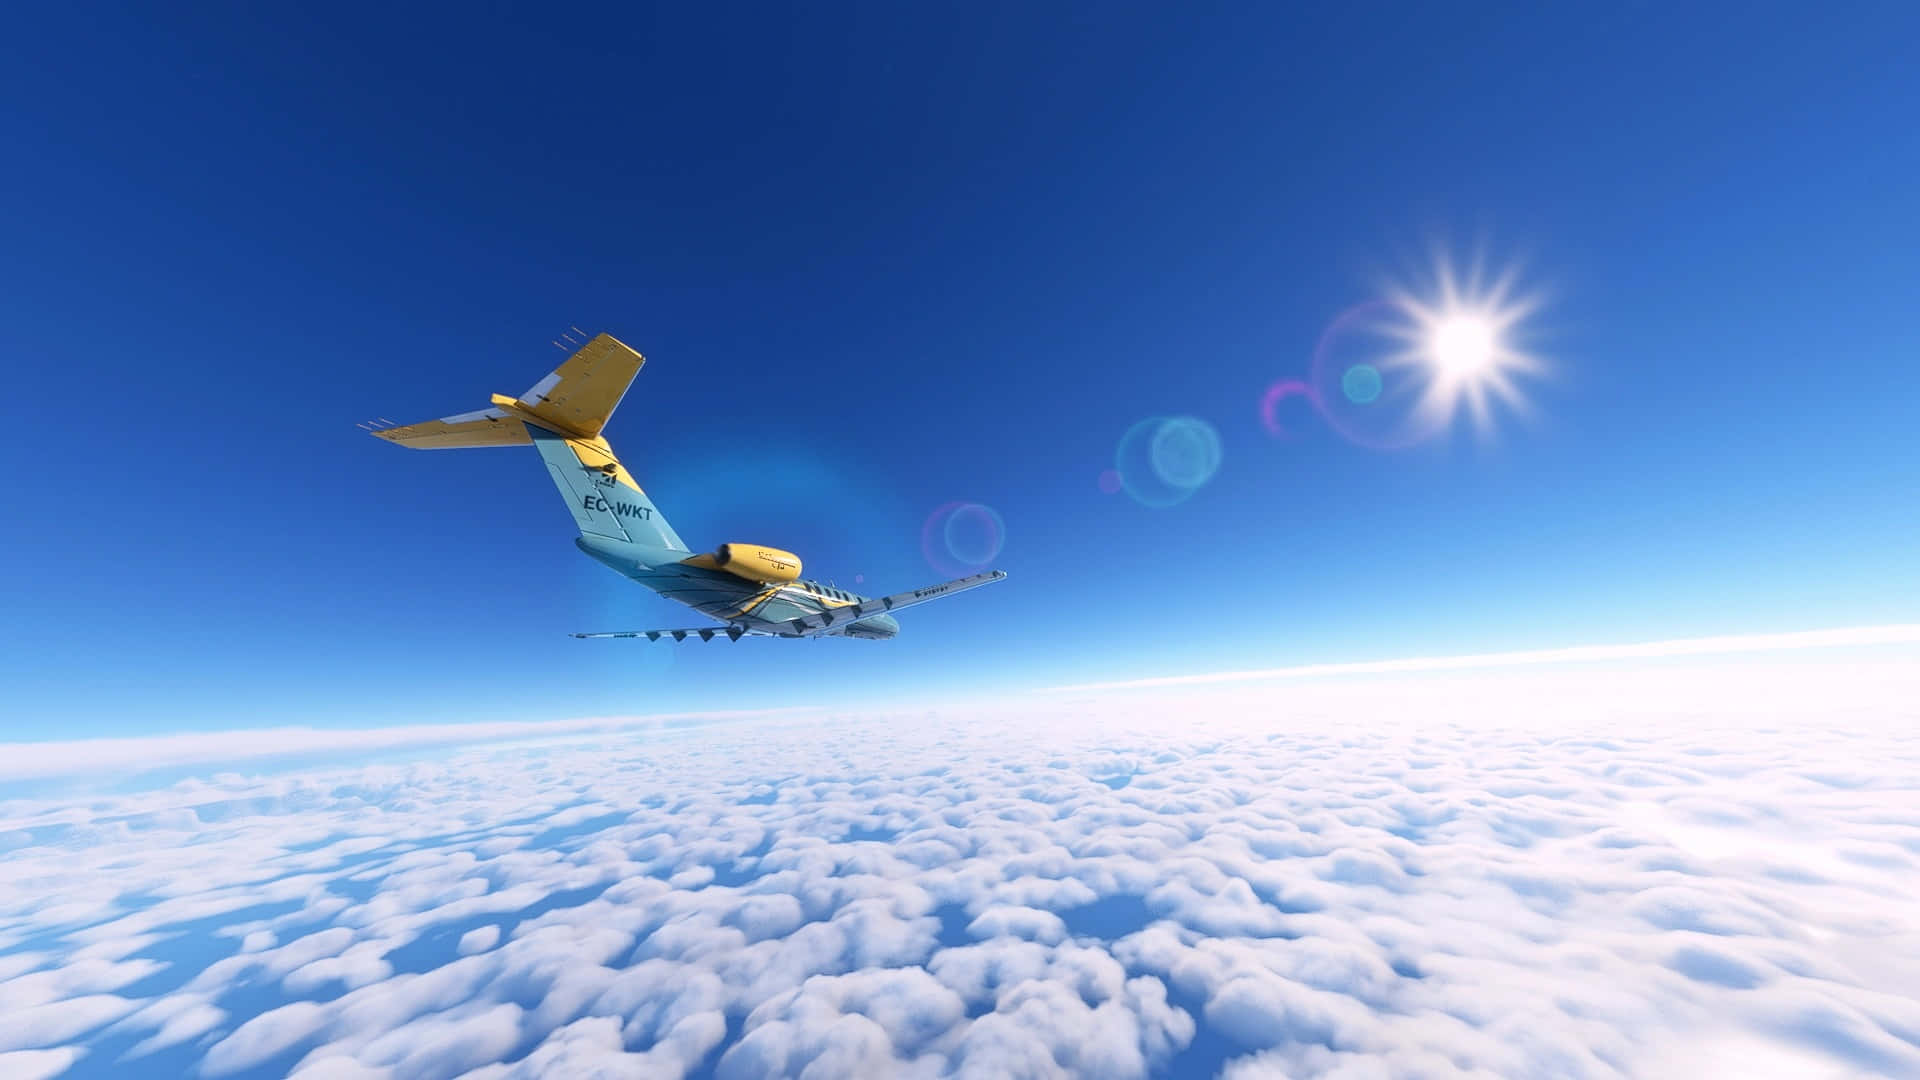 Tagtil Himlen I Microsoft Flight Simulator.